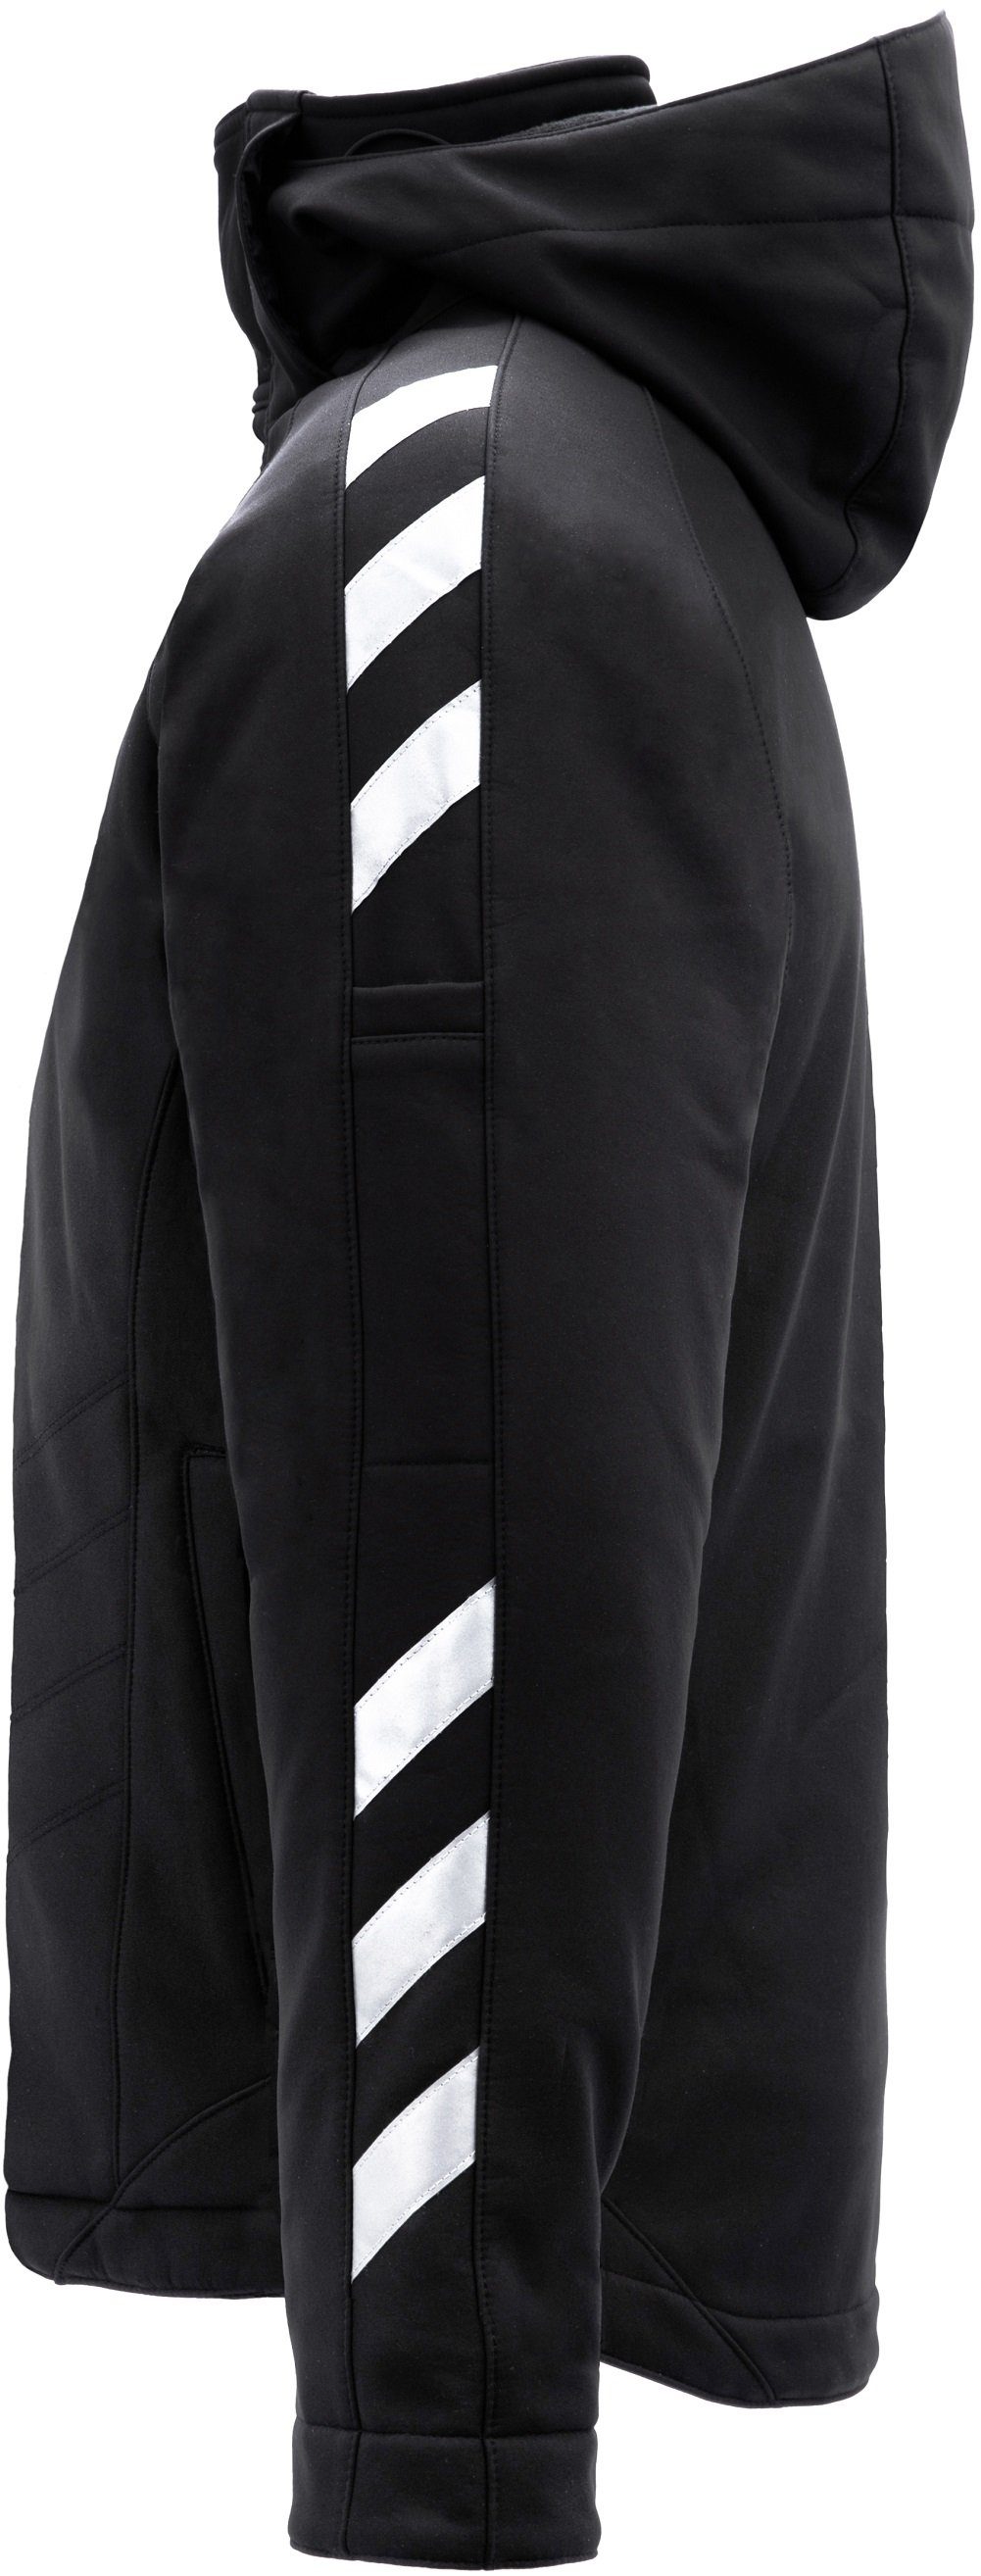 JOB Jacke mit Kapuze, Arbeitsjacke wasserabweisend Shell JOB-Winter-Soft schwarz winddicht,